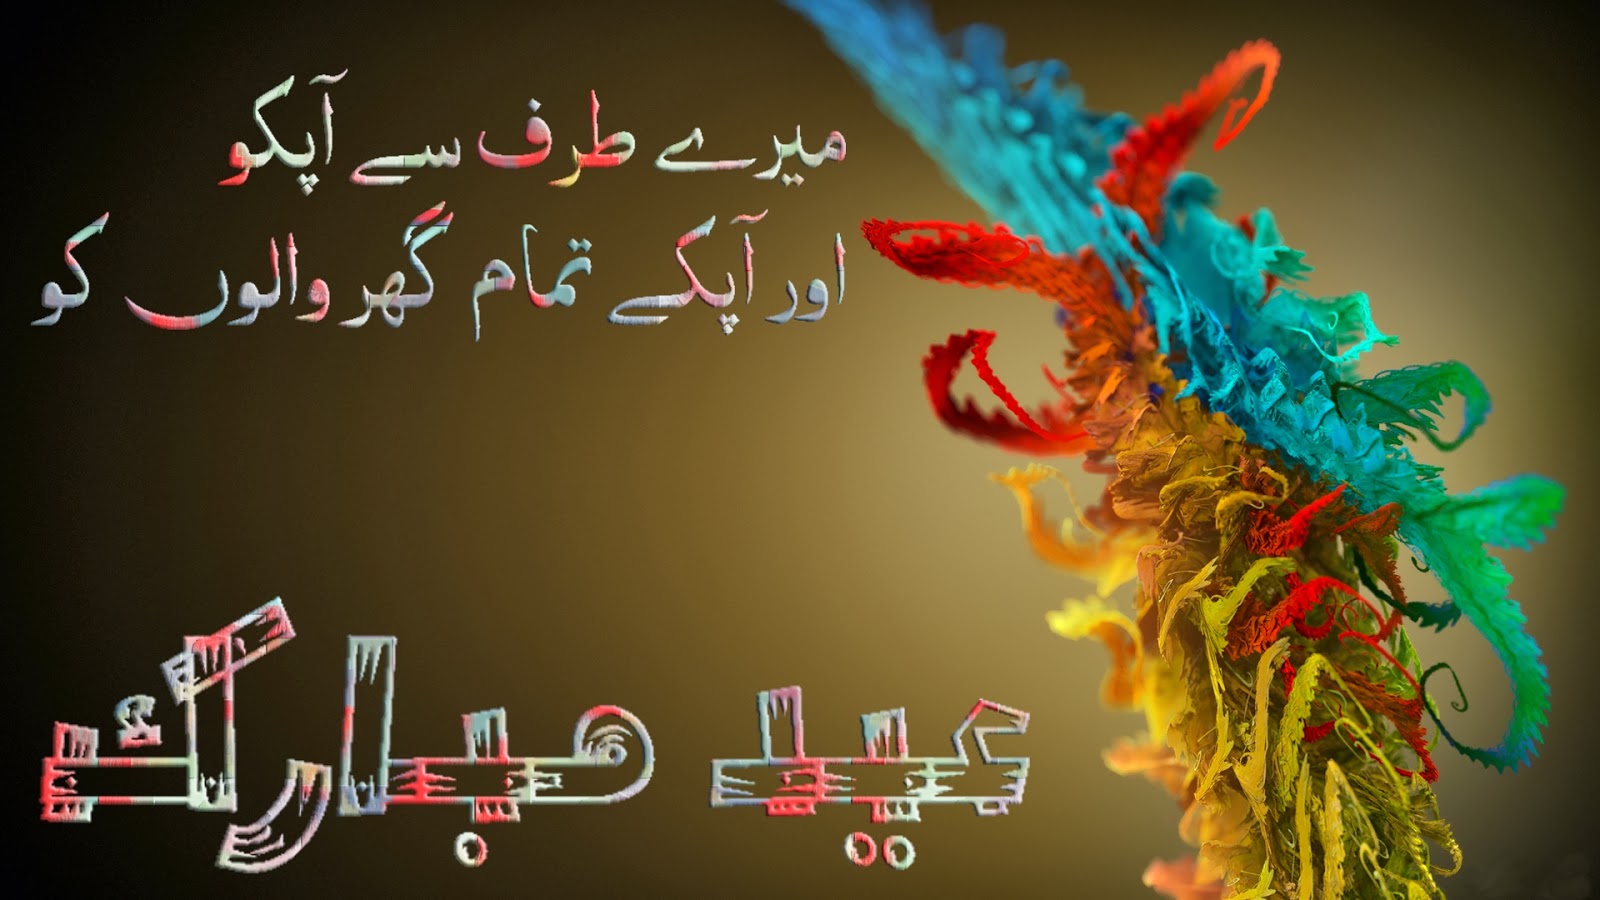 New 66 Eid Card Wishes In Urdu